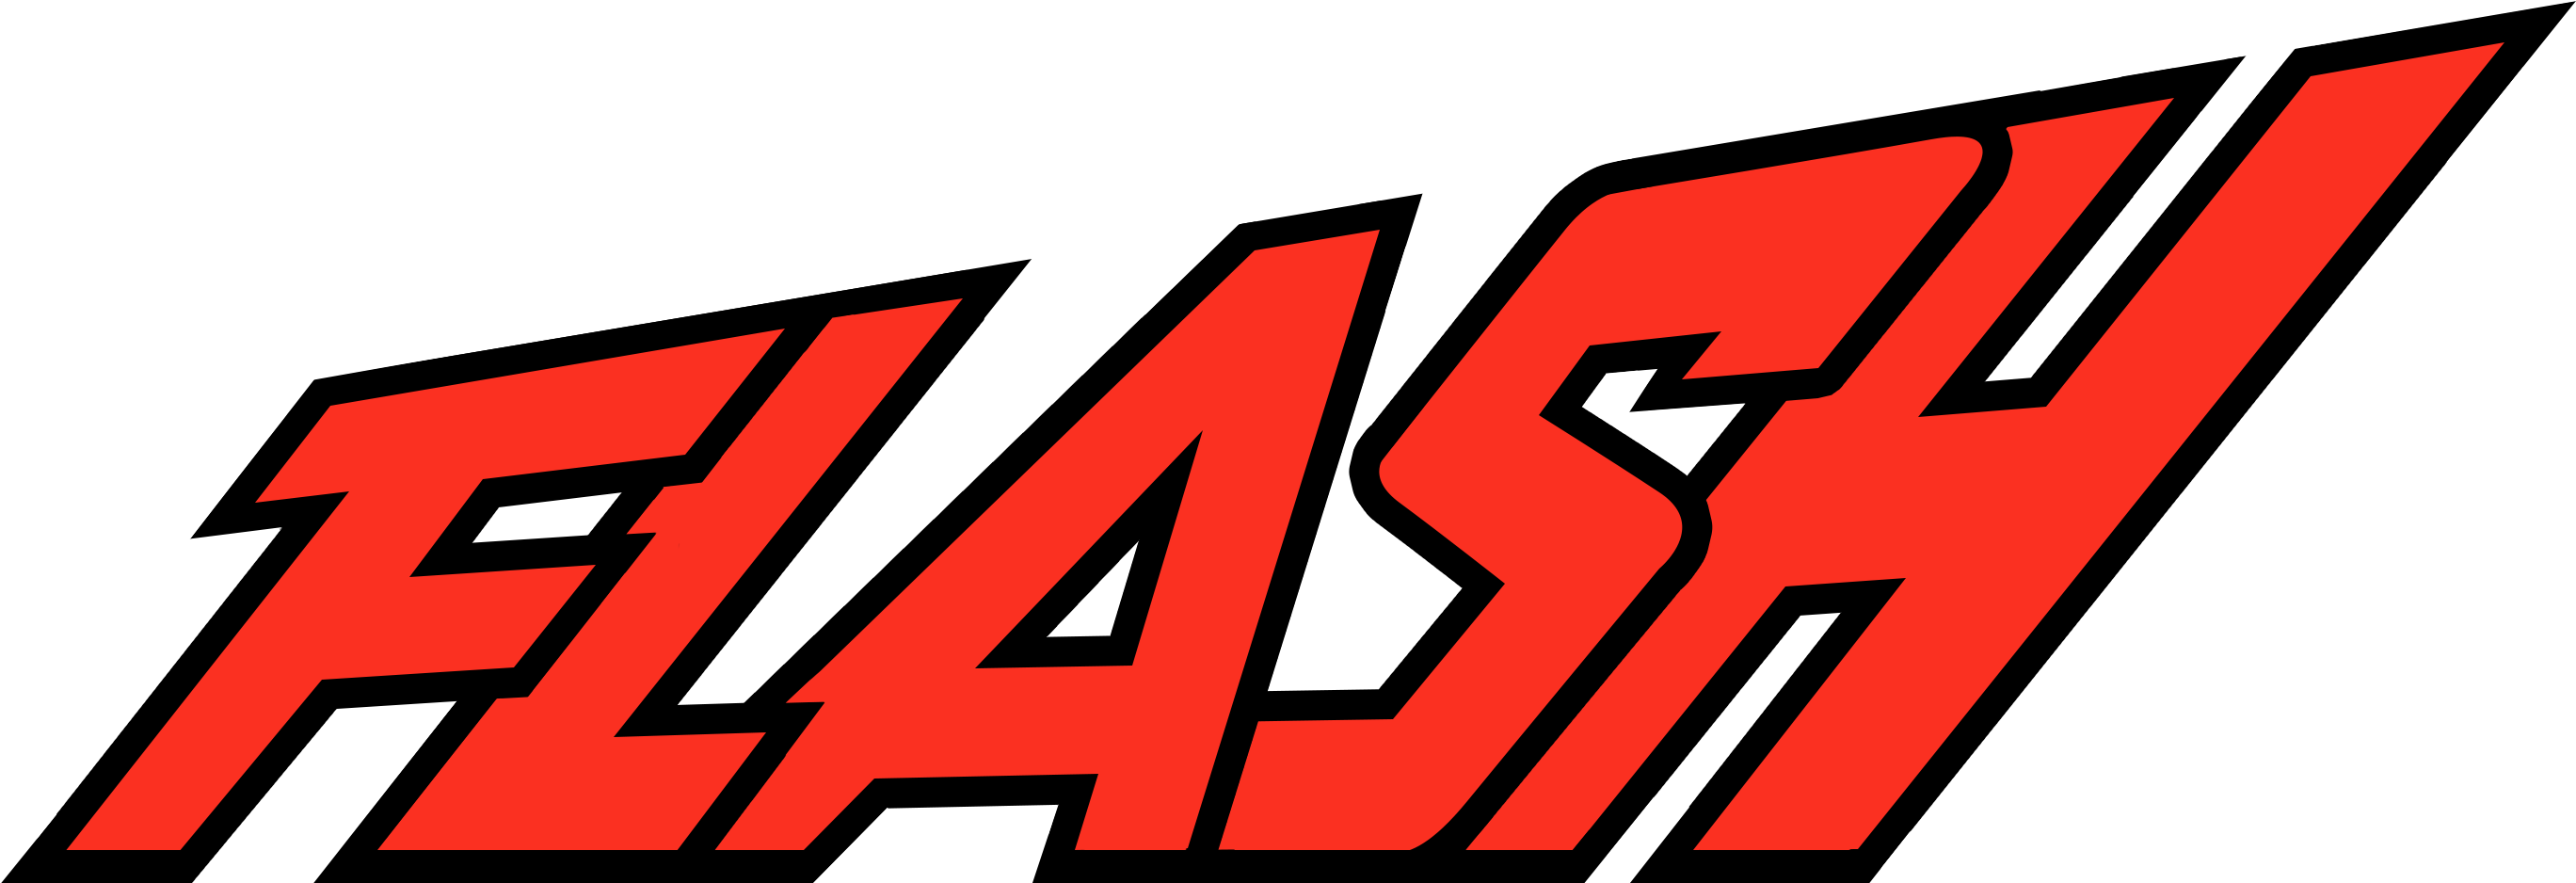 The Flash Logo Png 2737 X 938